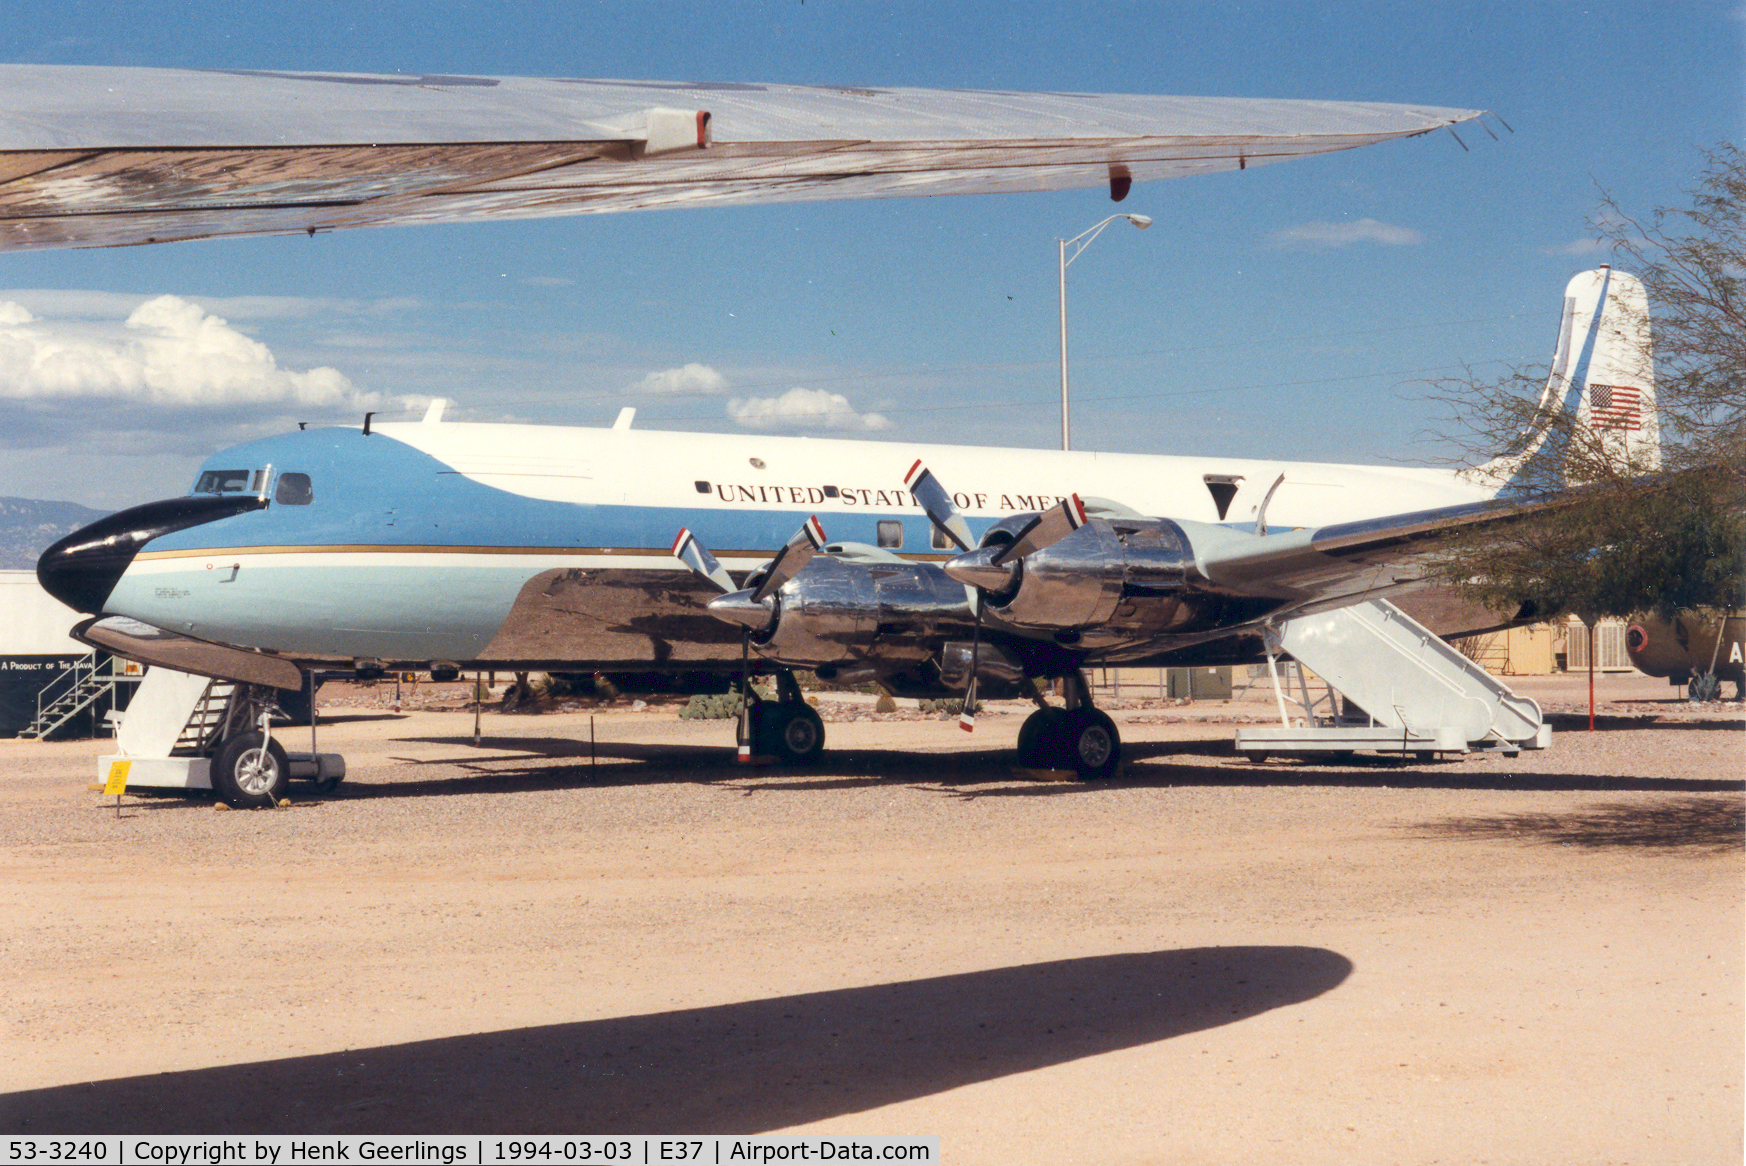 53-3240, 1954 Douglas VC-118A Liftmaster C/N 44611, Pima Air Museum.

Air Force One